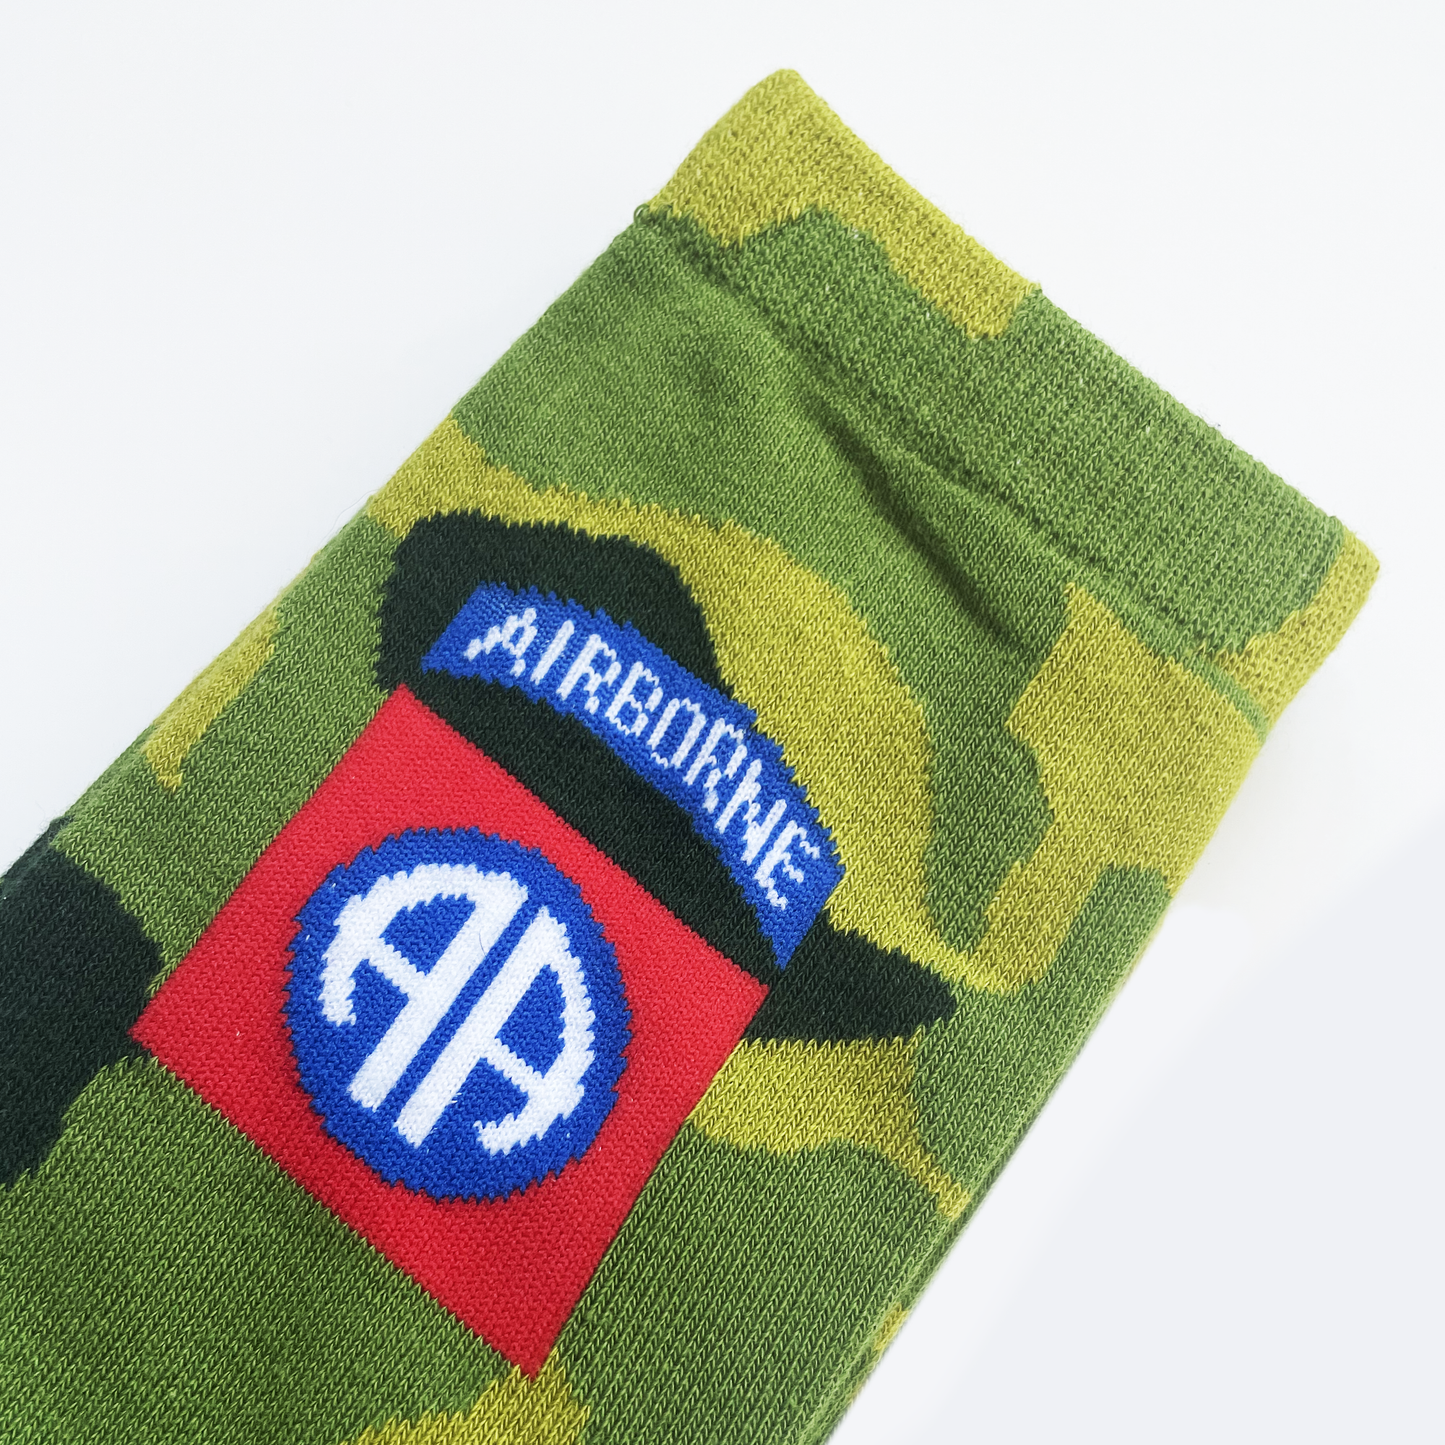 82nd Airborne Canopy socks